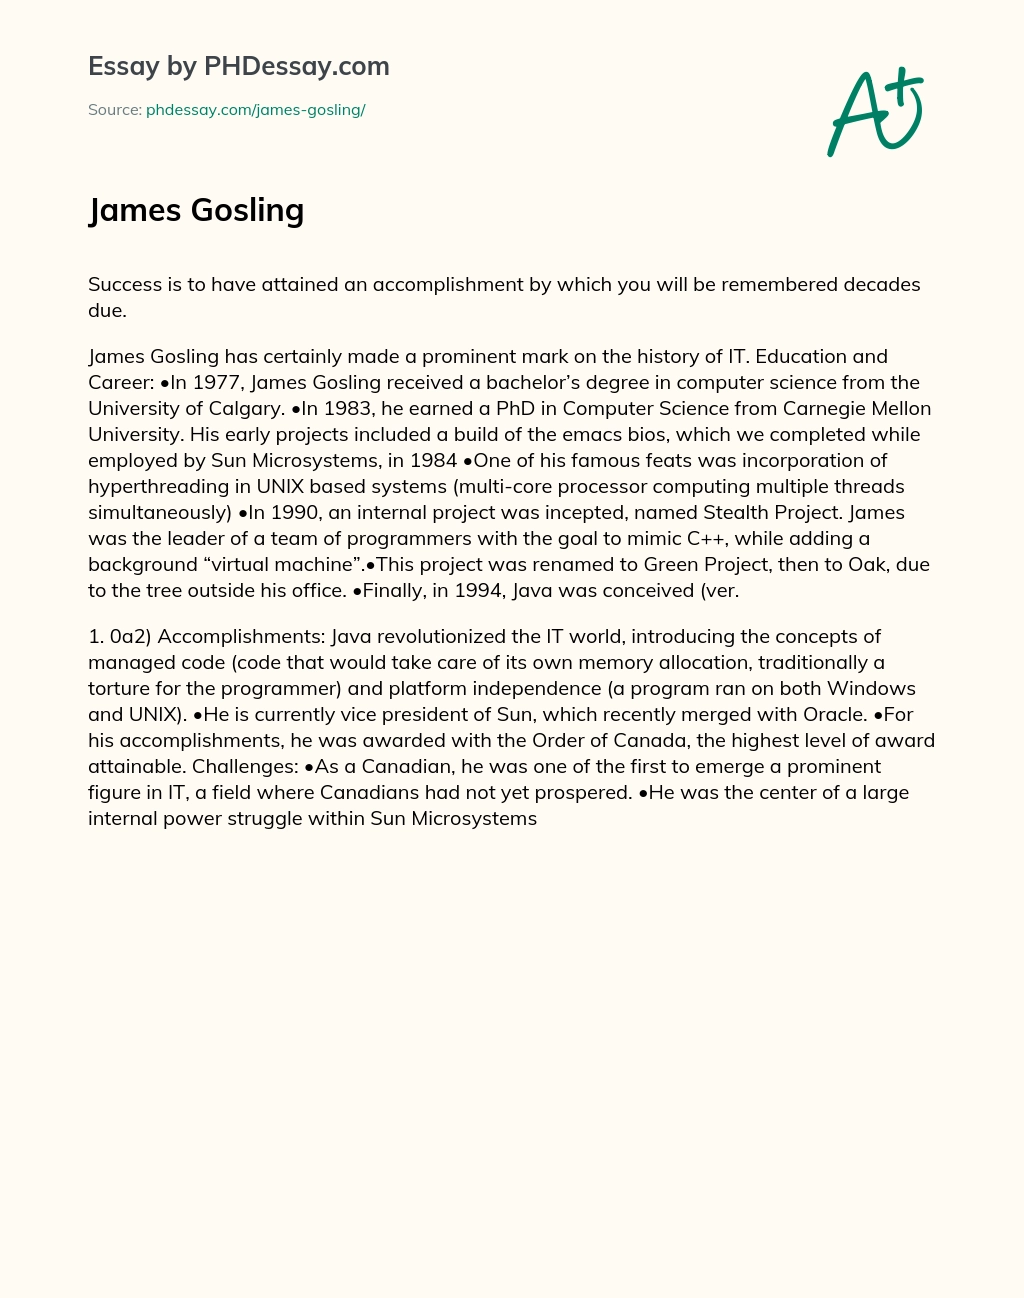 James Gosling’s Impact on IT: Java, Managed Code, and Platform Independence essay